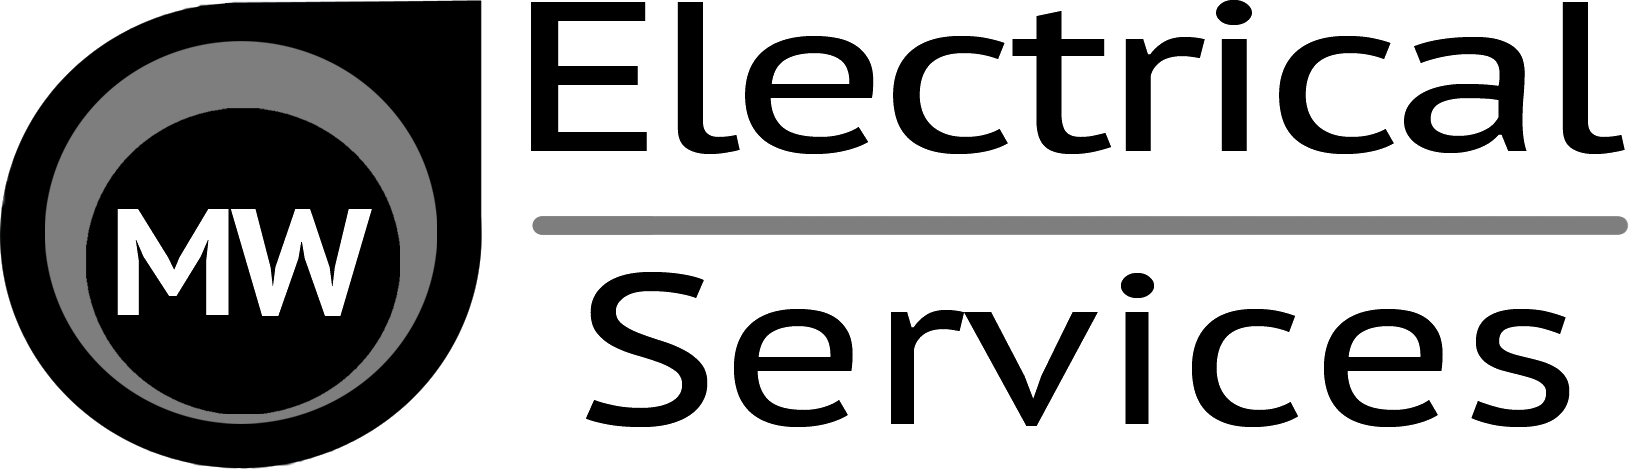 M W Electrical Services logo